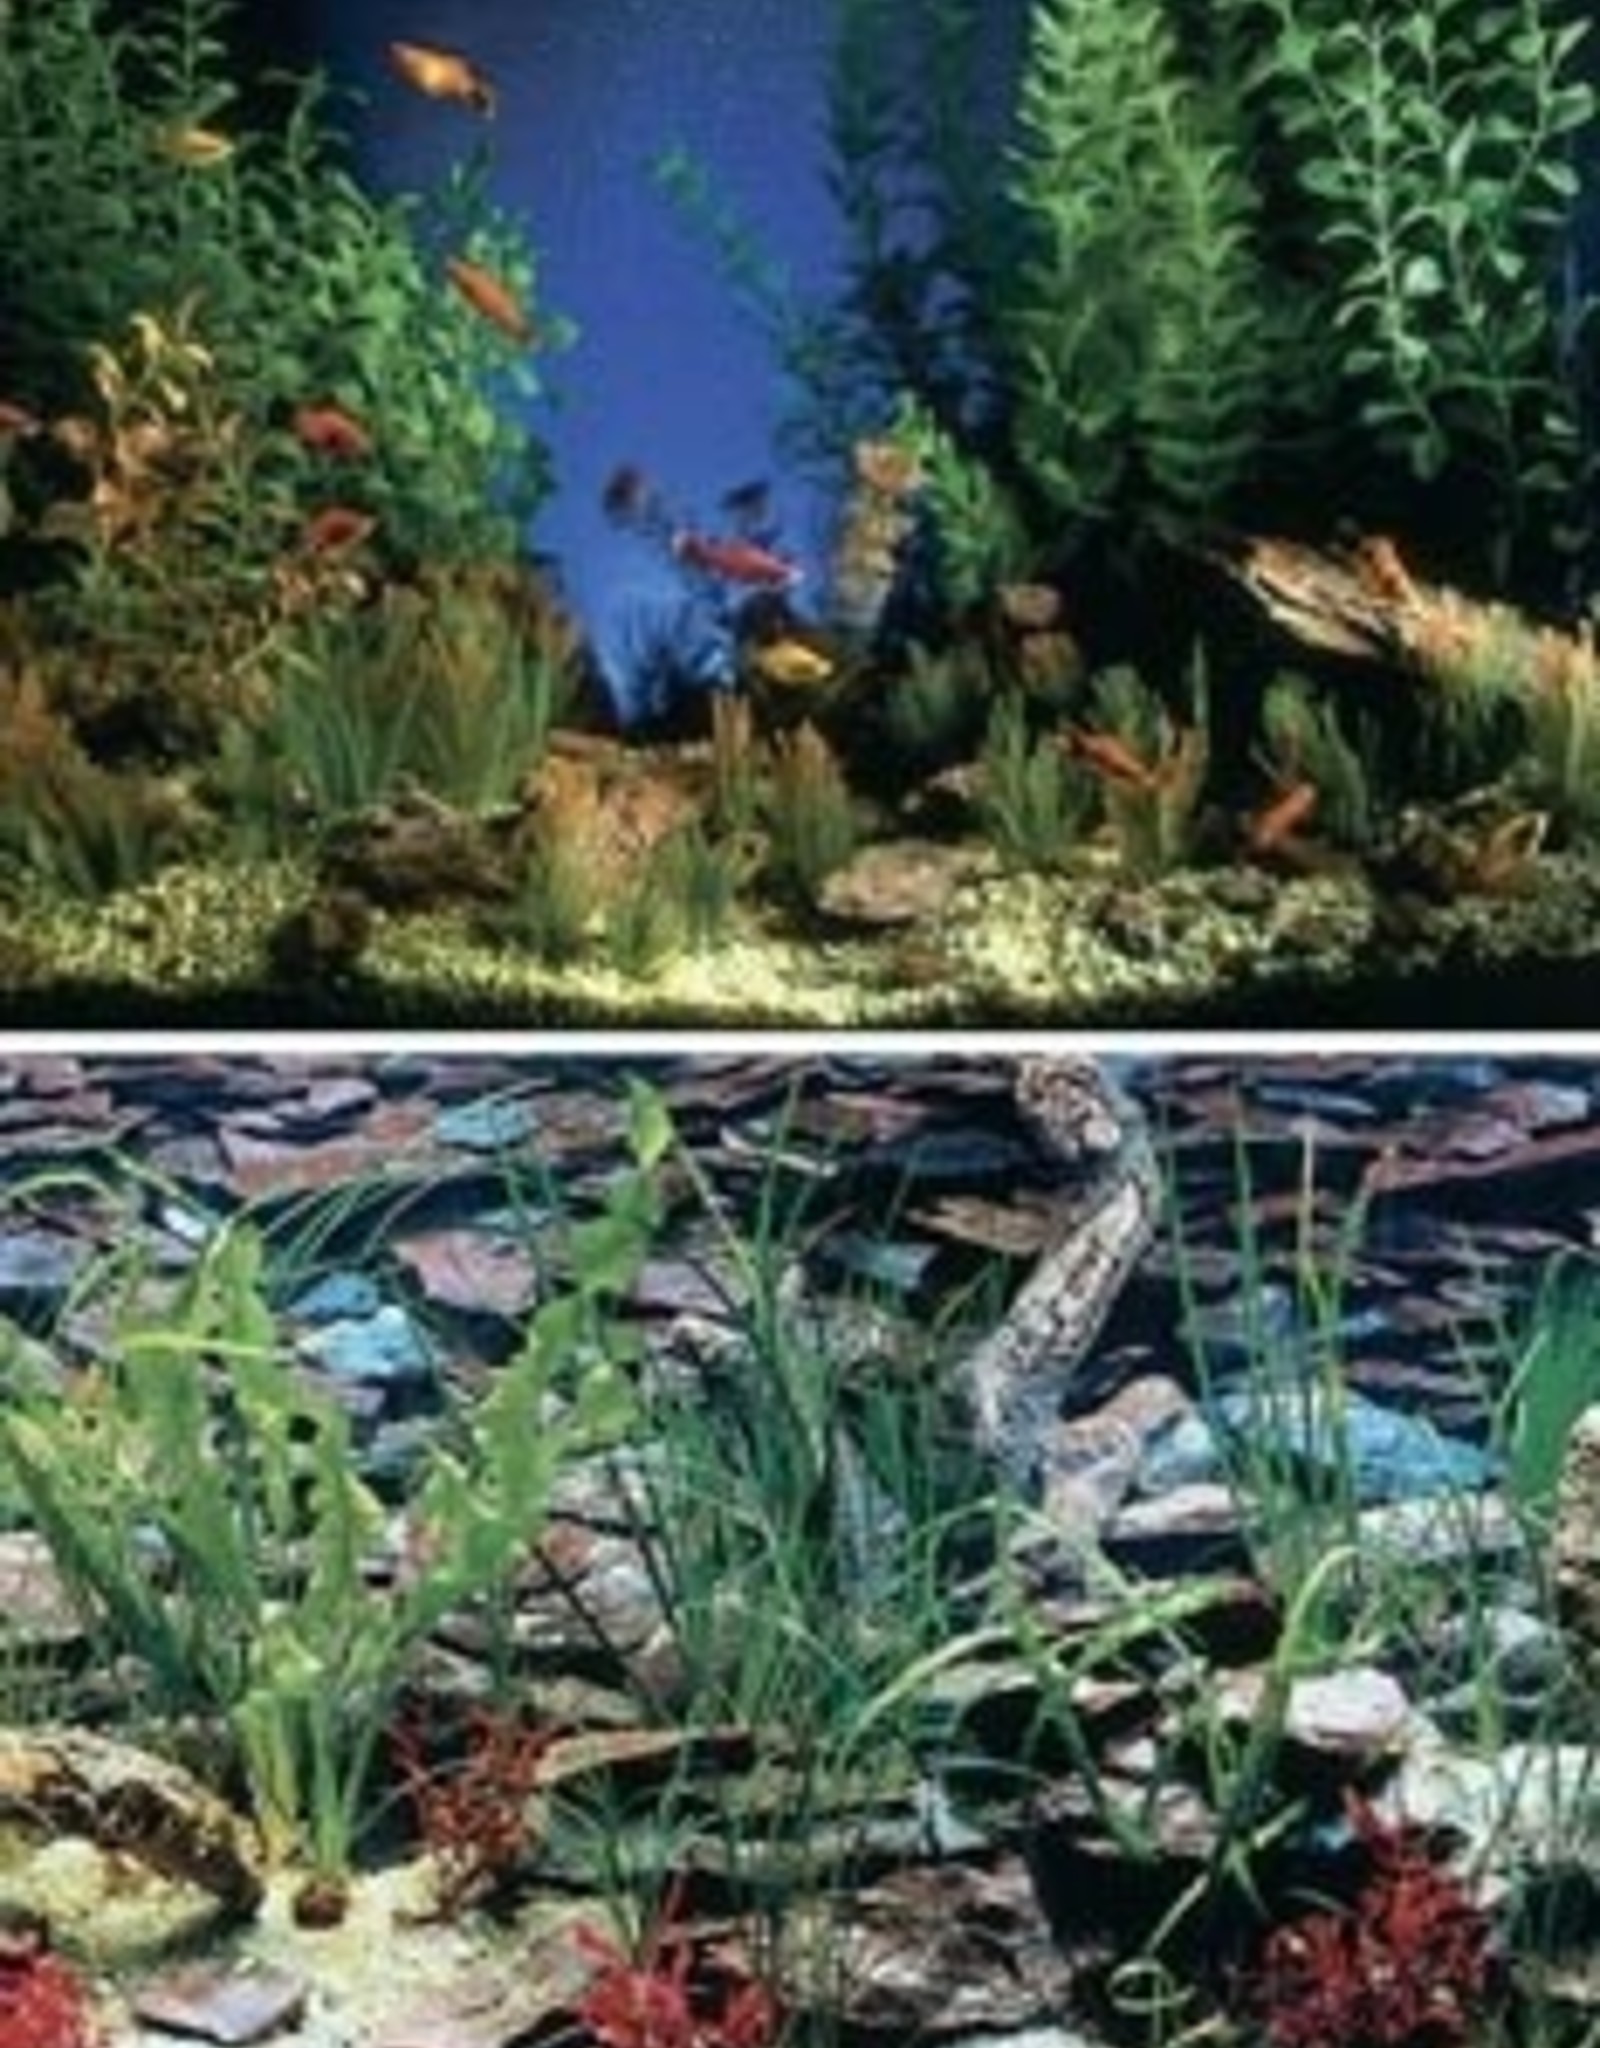 Penn-Plax AQUARAMA/SHALESCAPE 19in tall-per inch Aquarium Backing